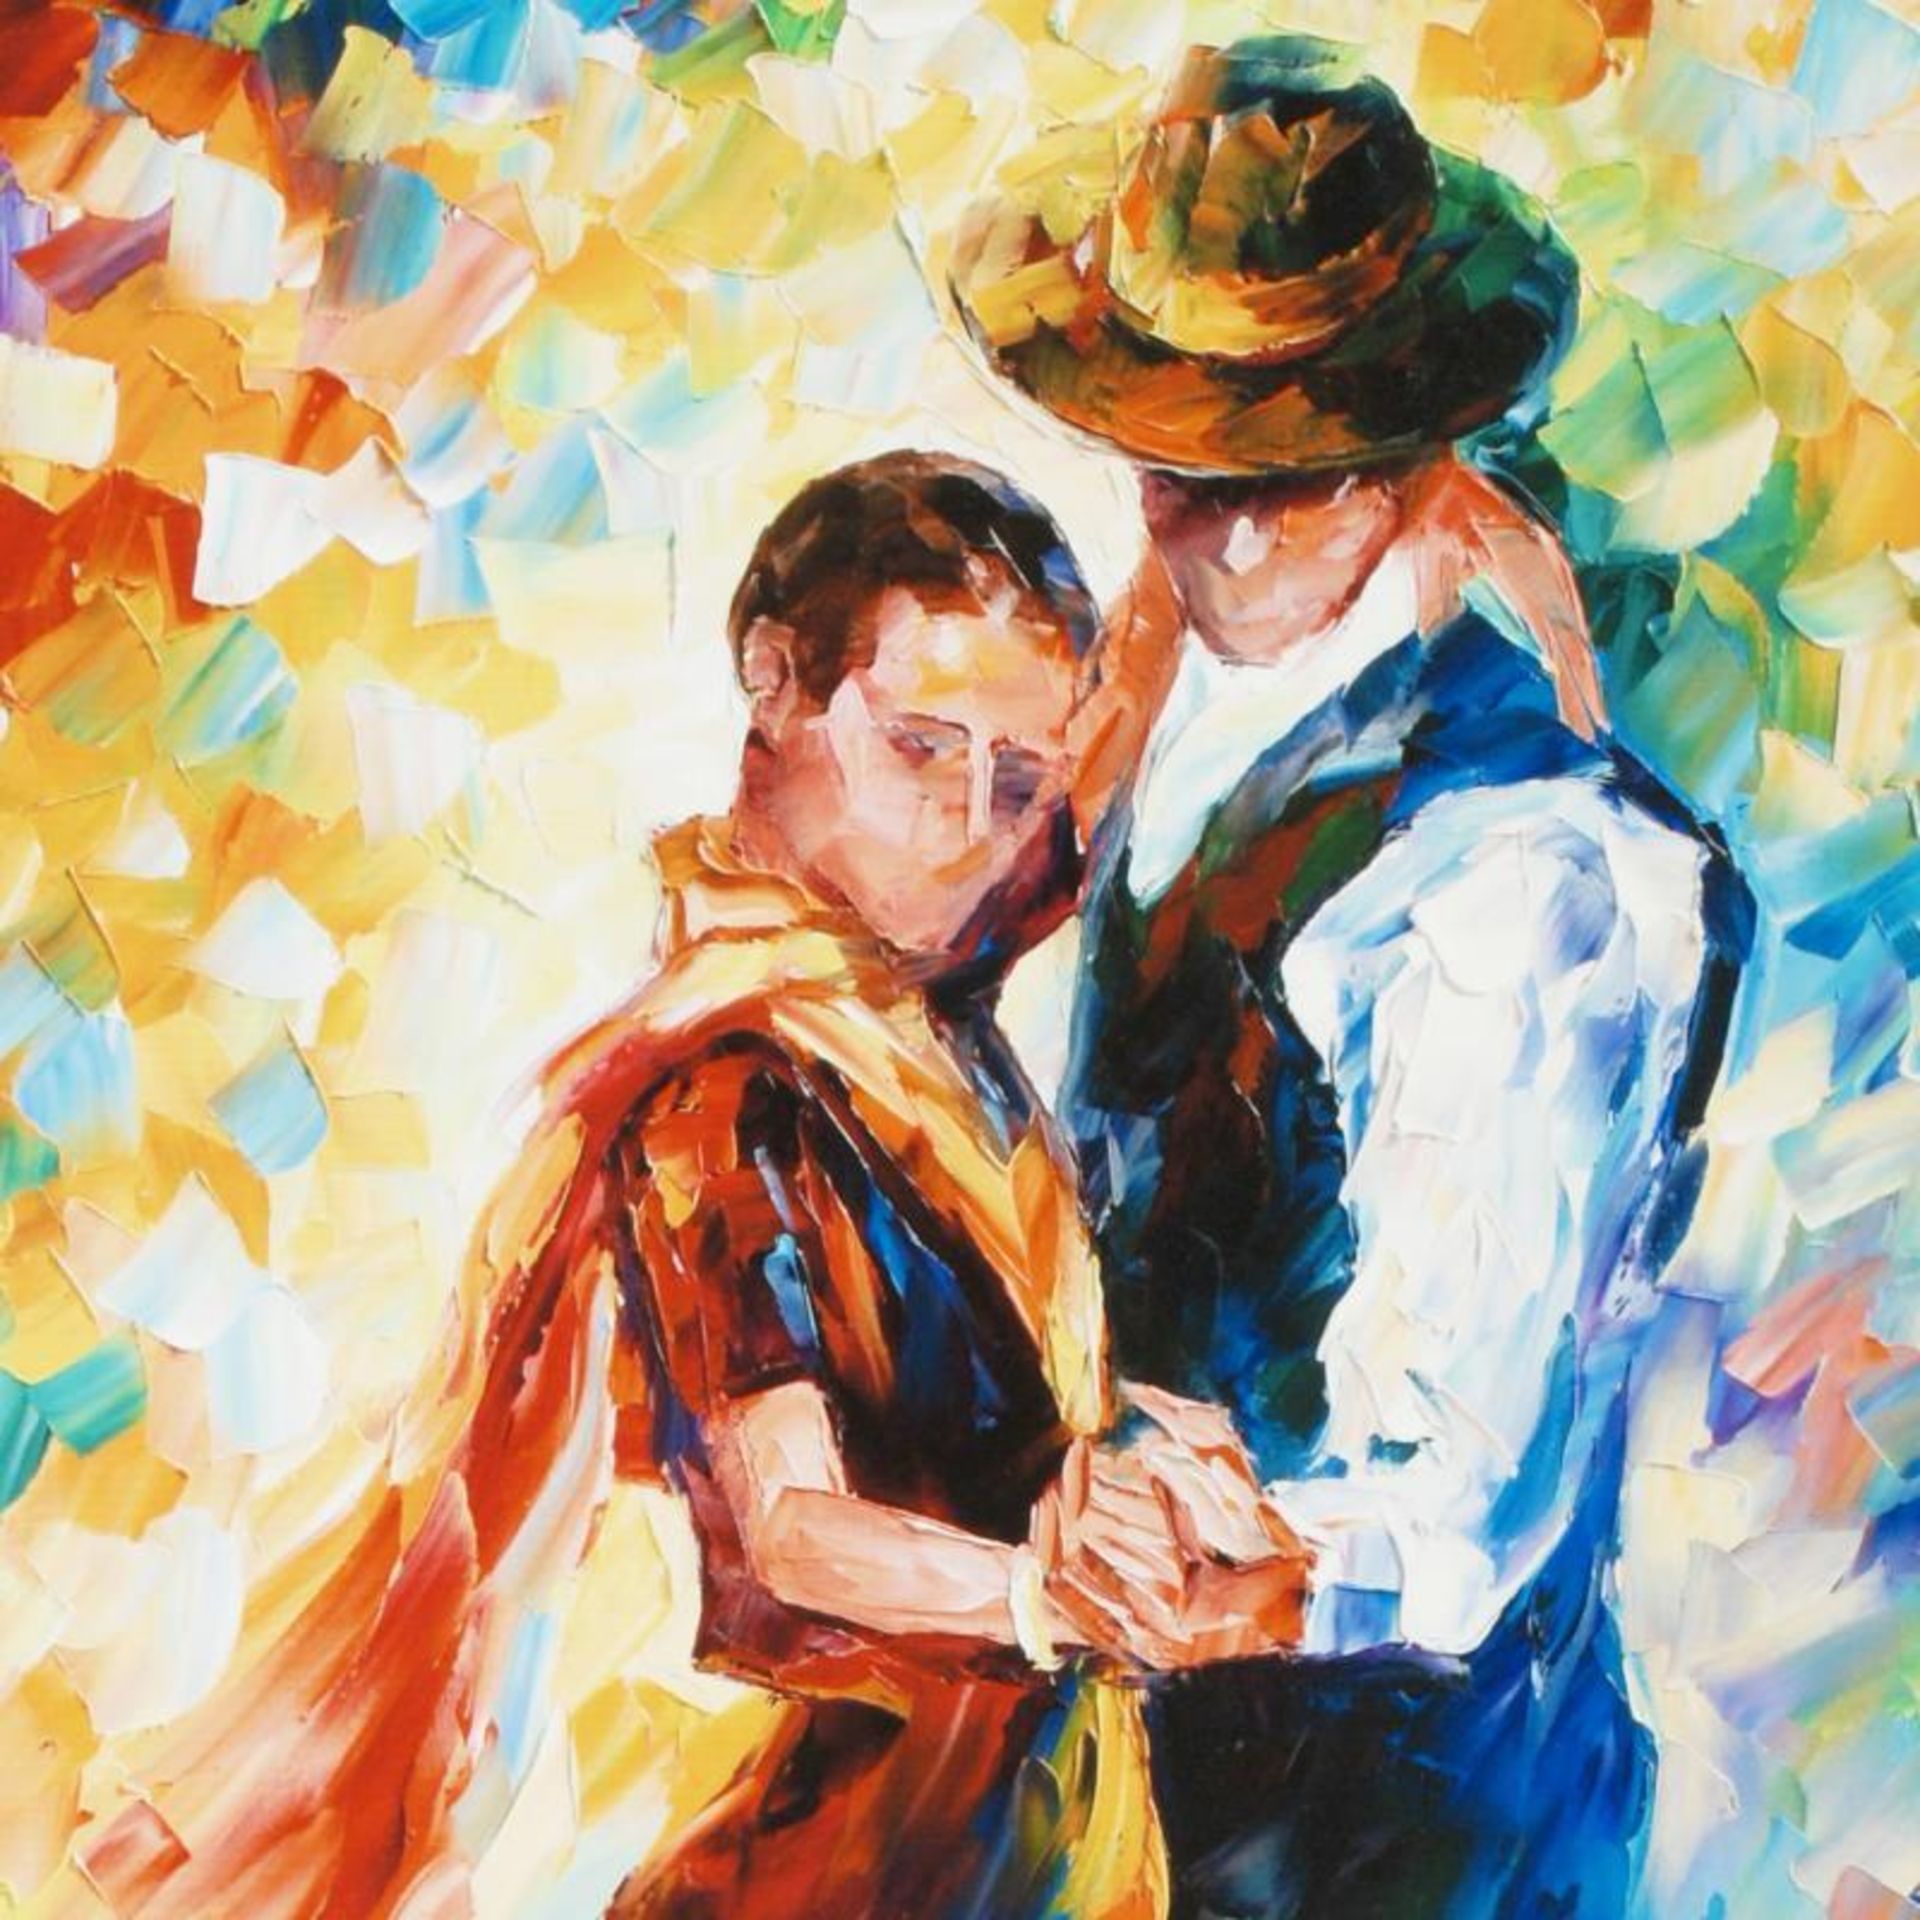 Romantic Tango by Afremov (1955-2019) - Image 2 of 3